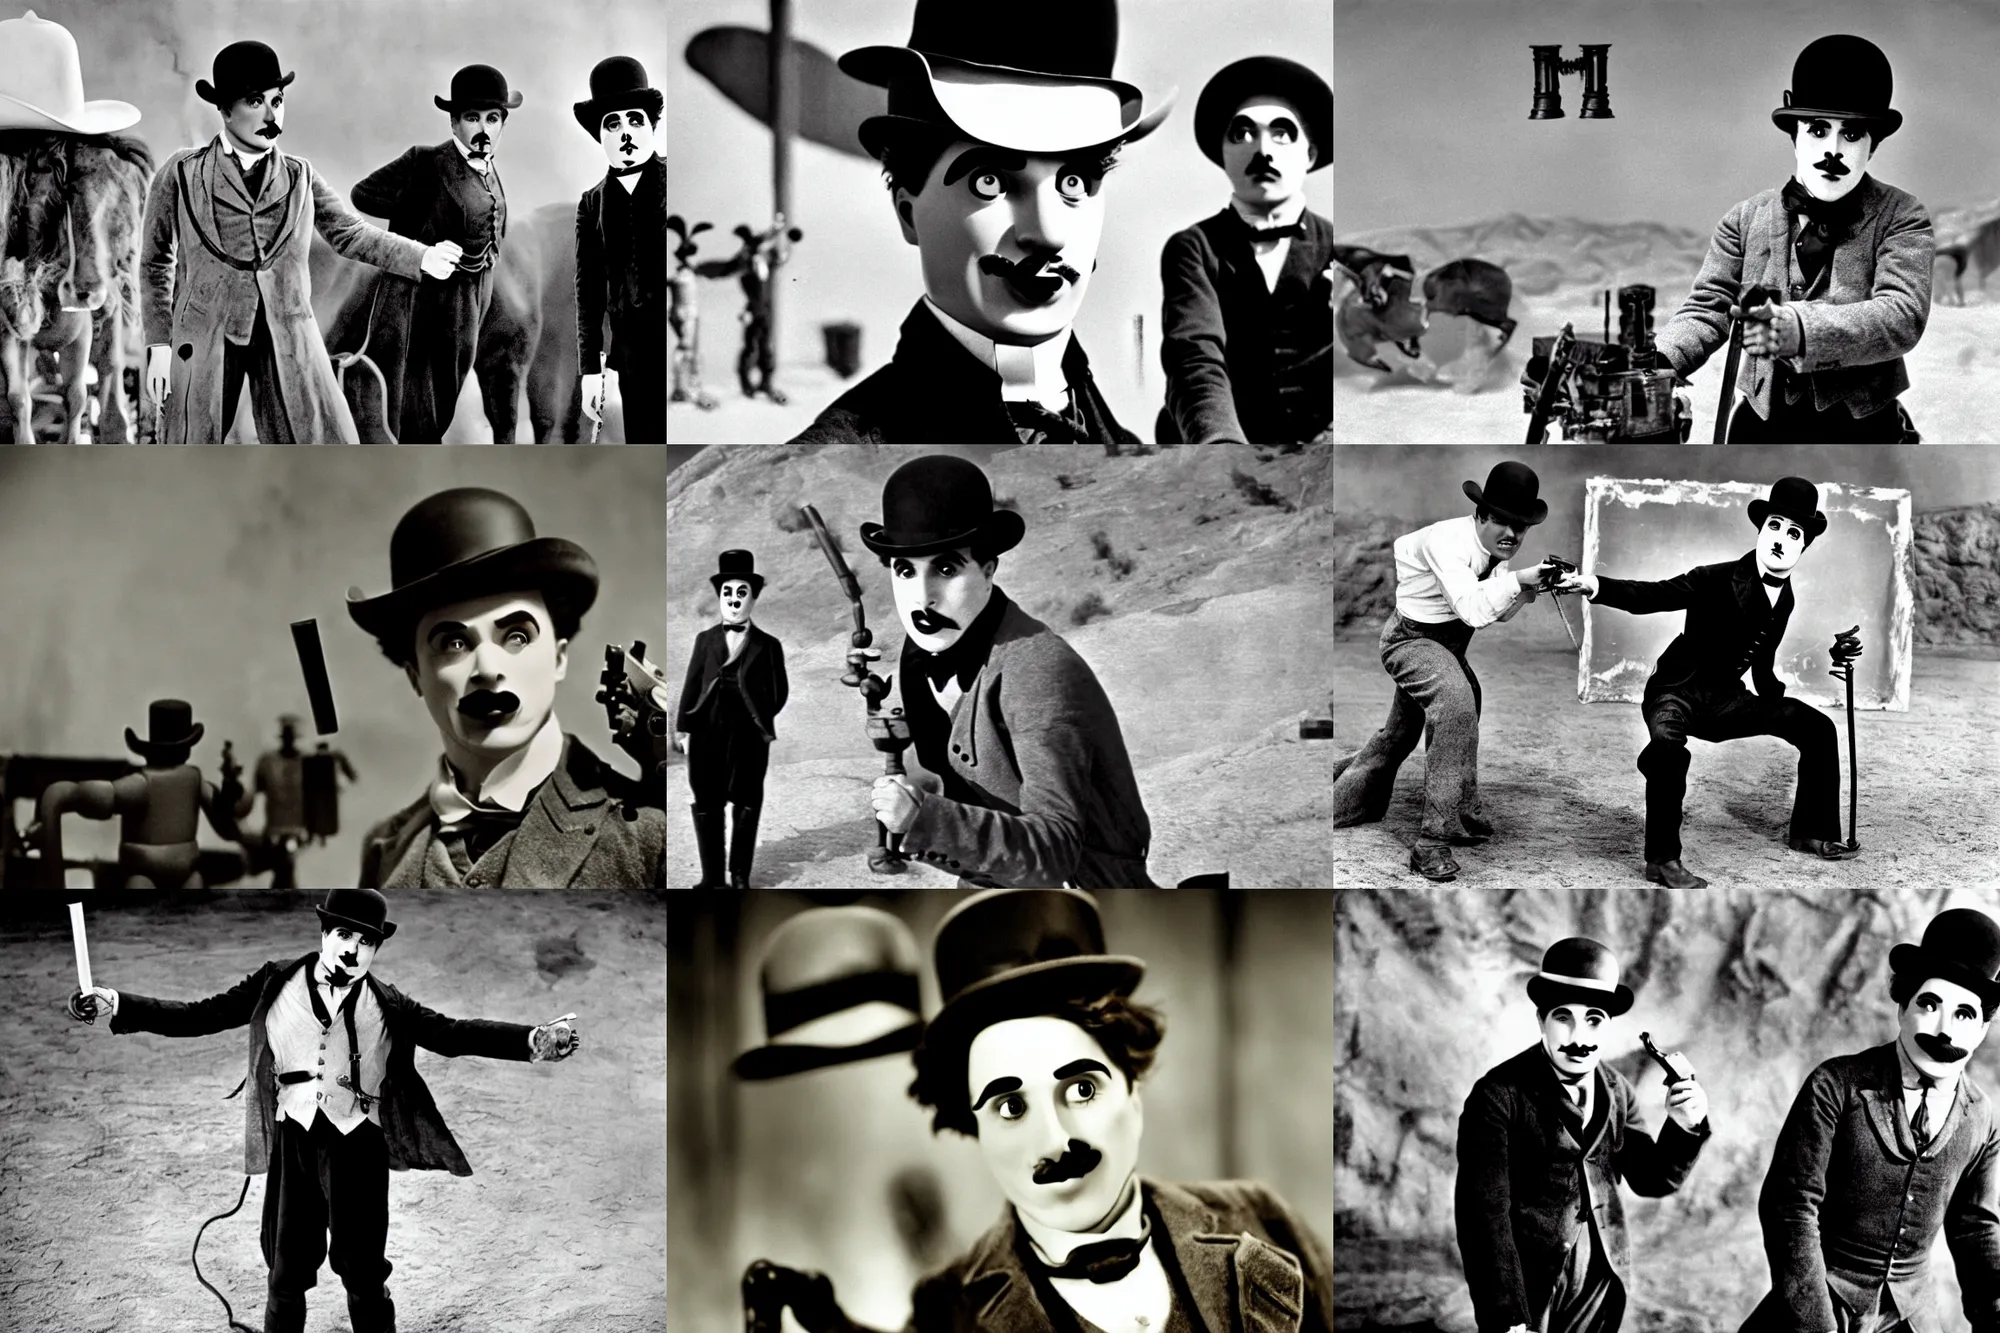 Prompt: charlie chaplin in westworld fighting robot cowboys, silent movie, cinestill, hd - photo, ninteenseventyfour